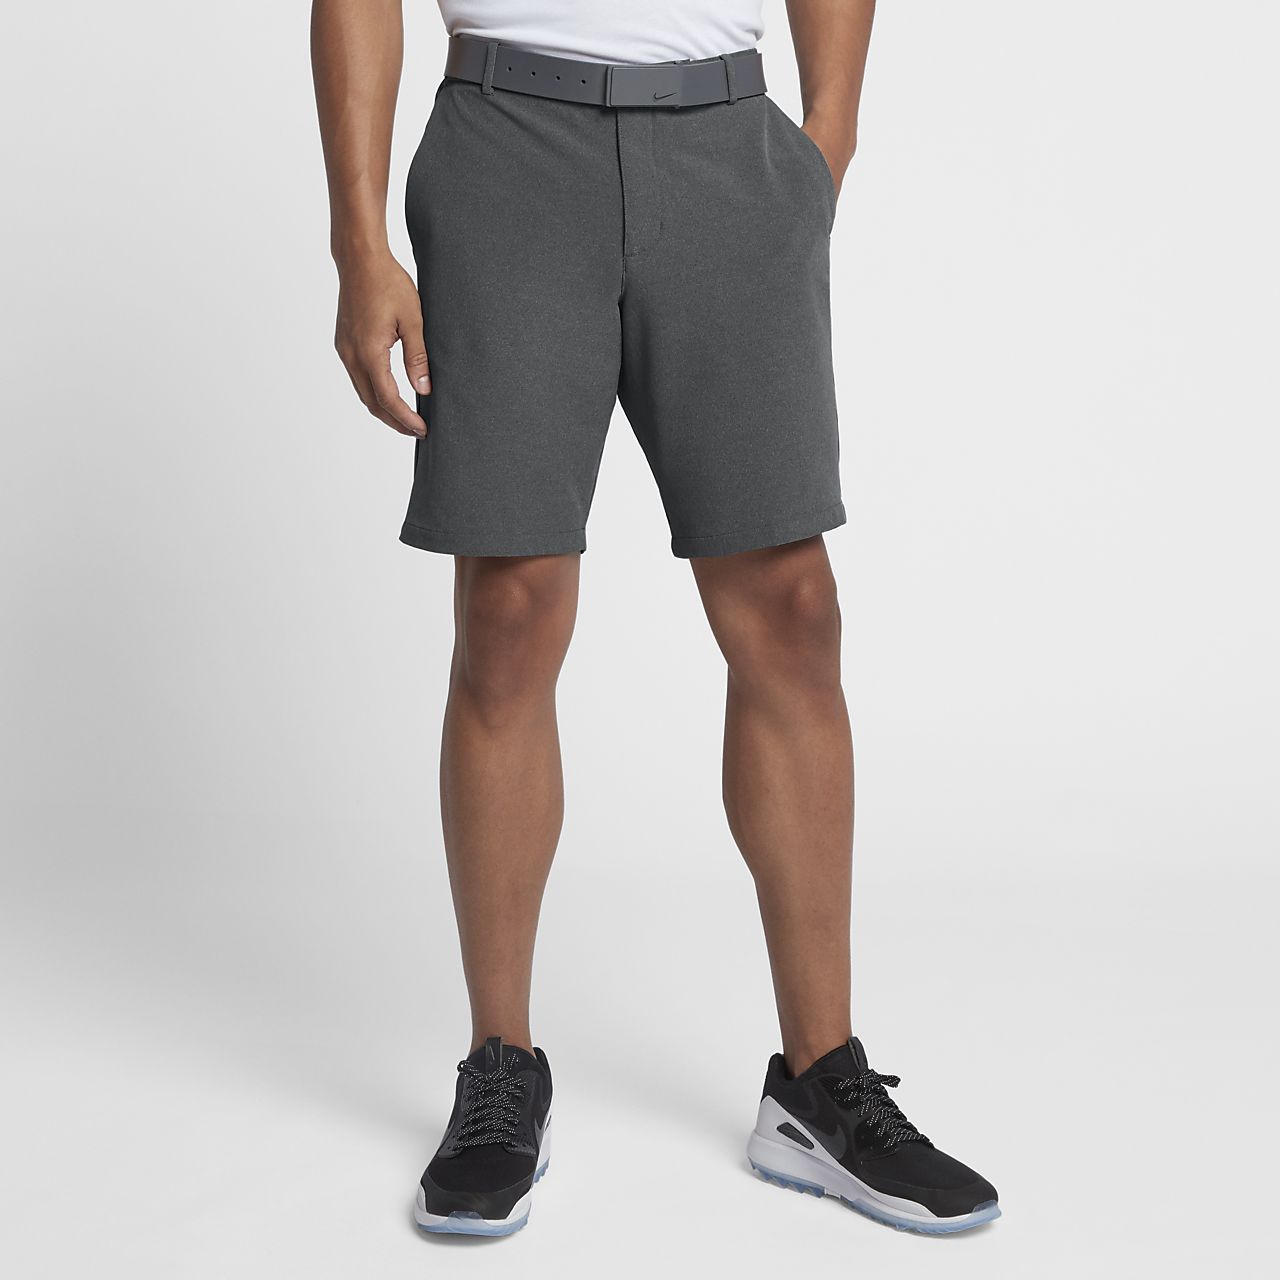 grey nike golf shorts cheap online